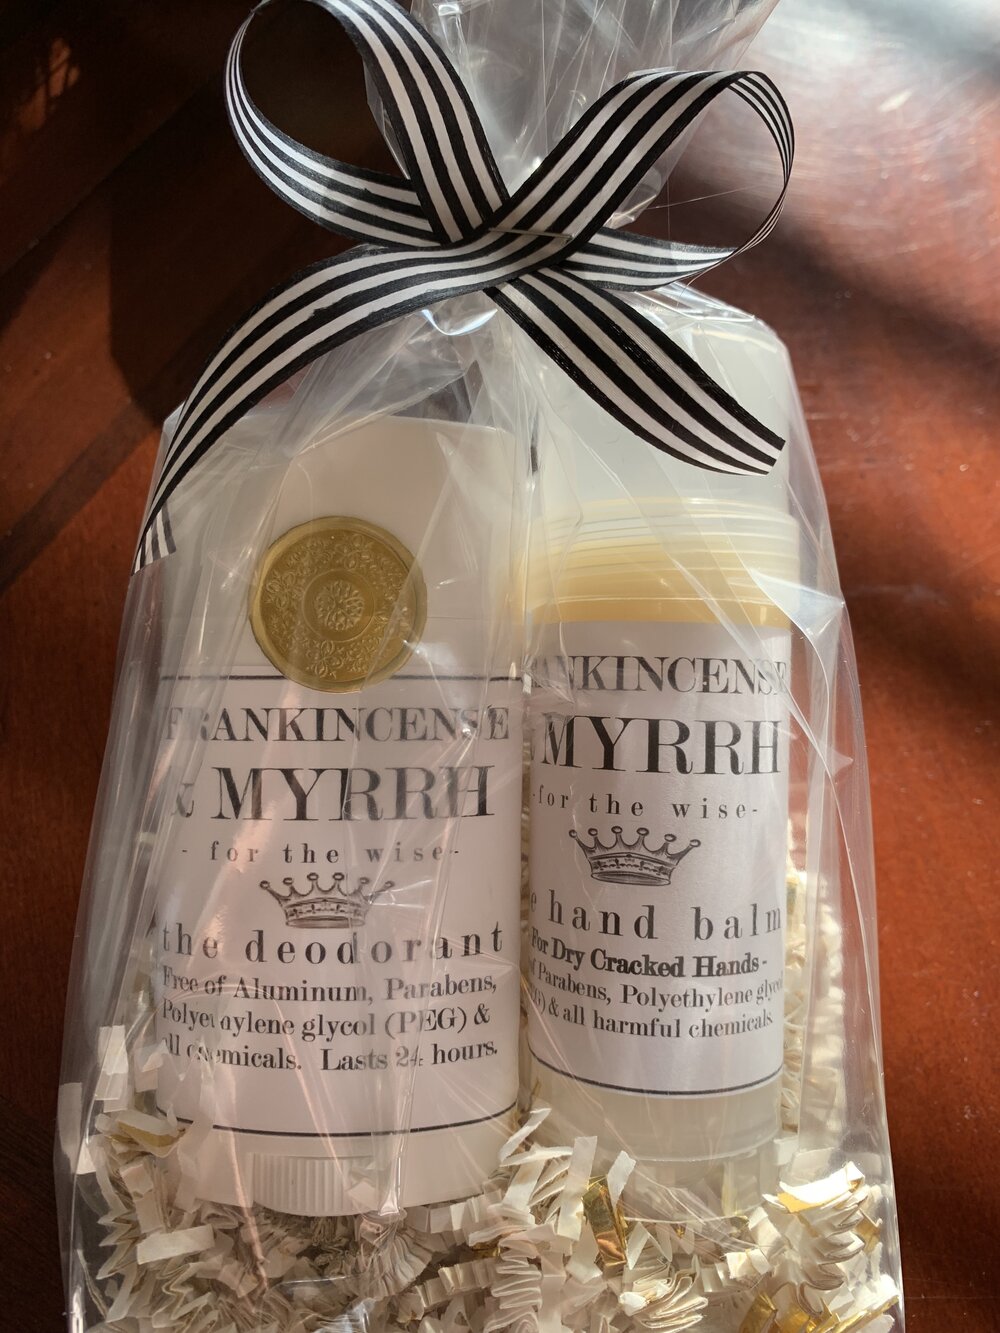 Frankincense and Myrrh Essential Oil Combo Set -- The Original Christian  Gift